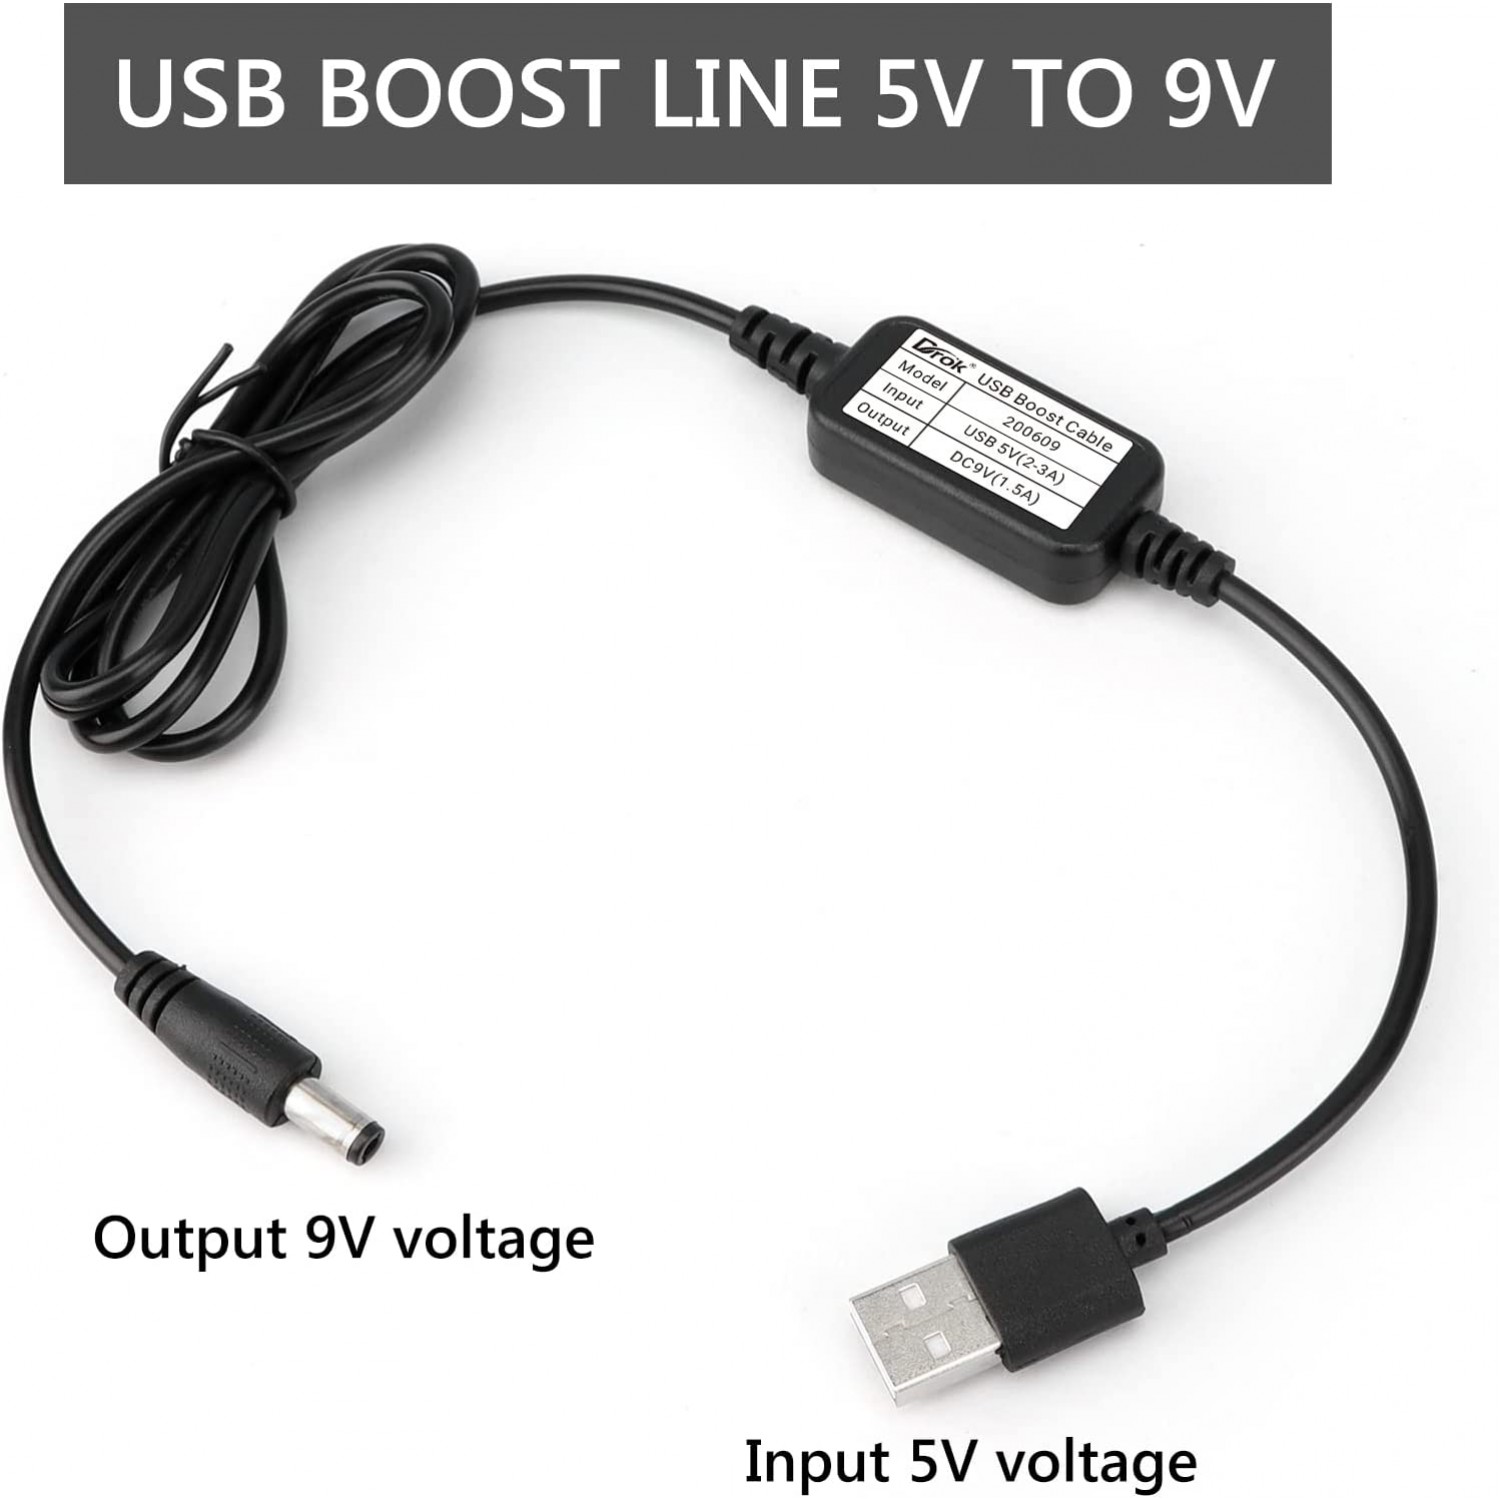 USB to 9v, DROK 5v to 9v USB Boost Converter, USB Cable DC 5v Step